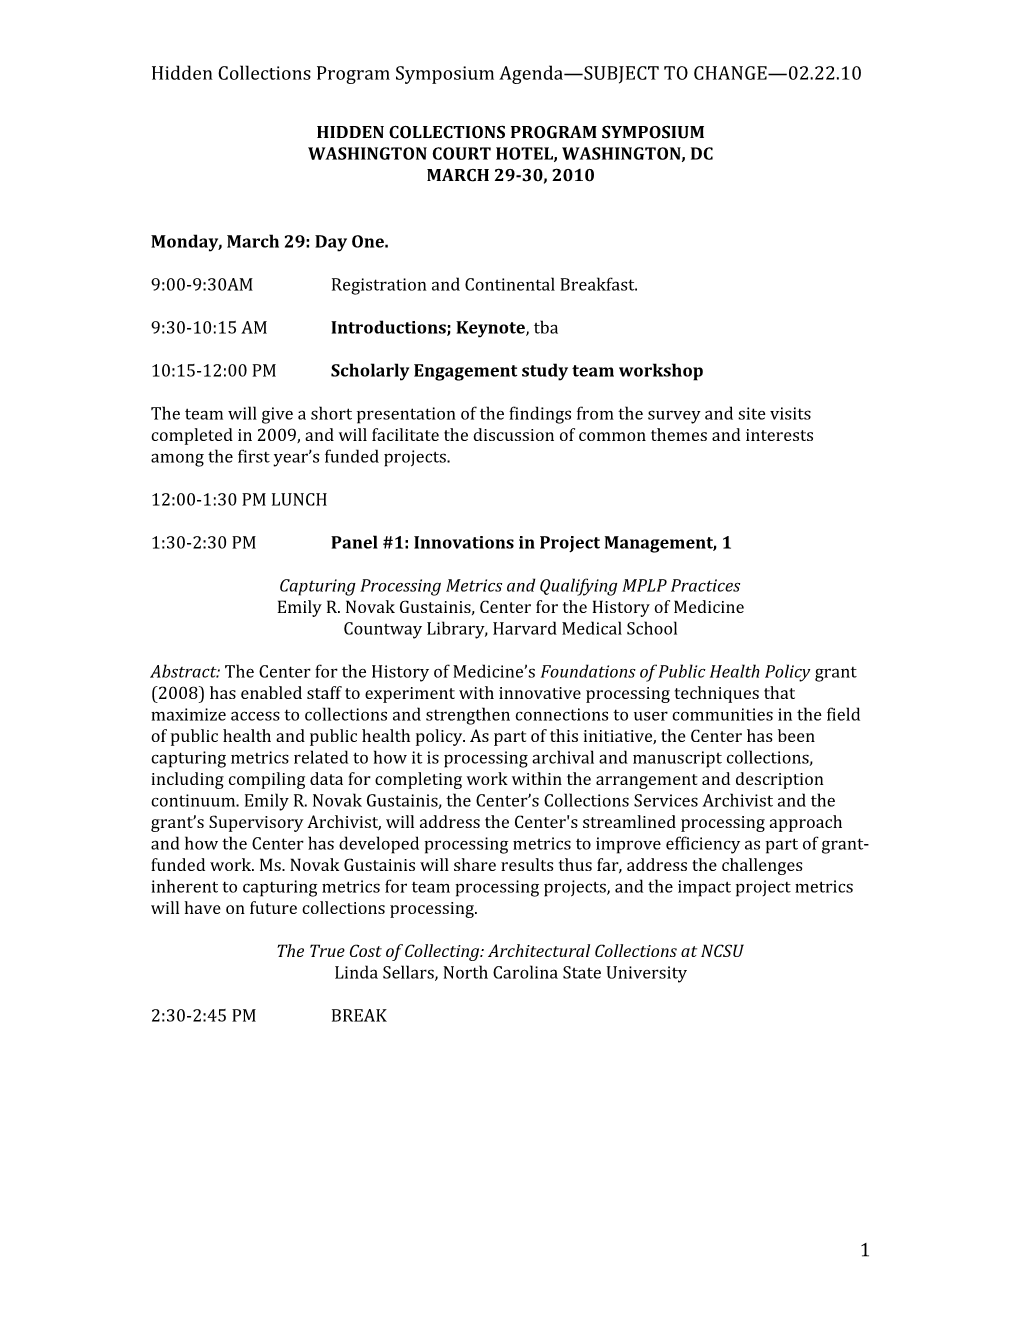 Hidden Collections Program Symposium Agenda SUBJECT to CHANGE 02.22.10